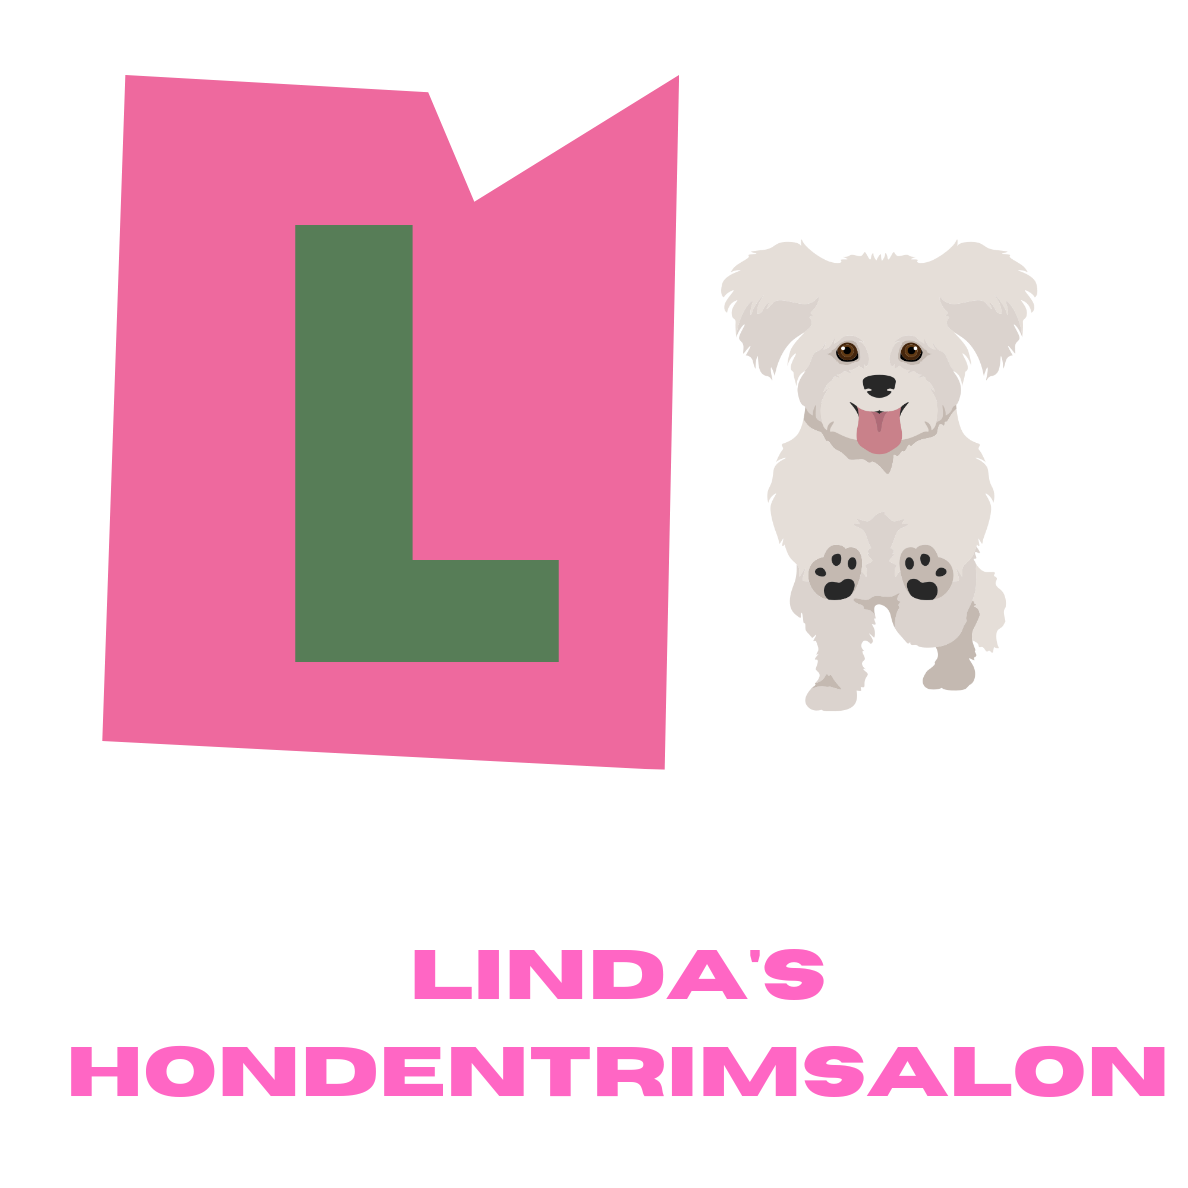 Linda's Hondentrimsalon